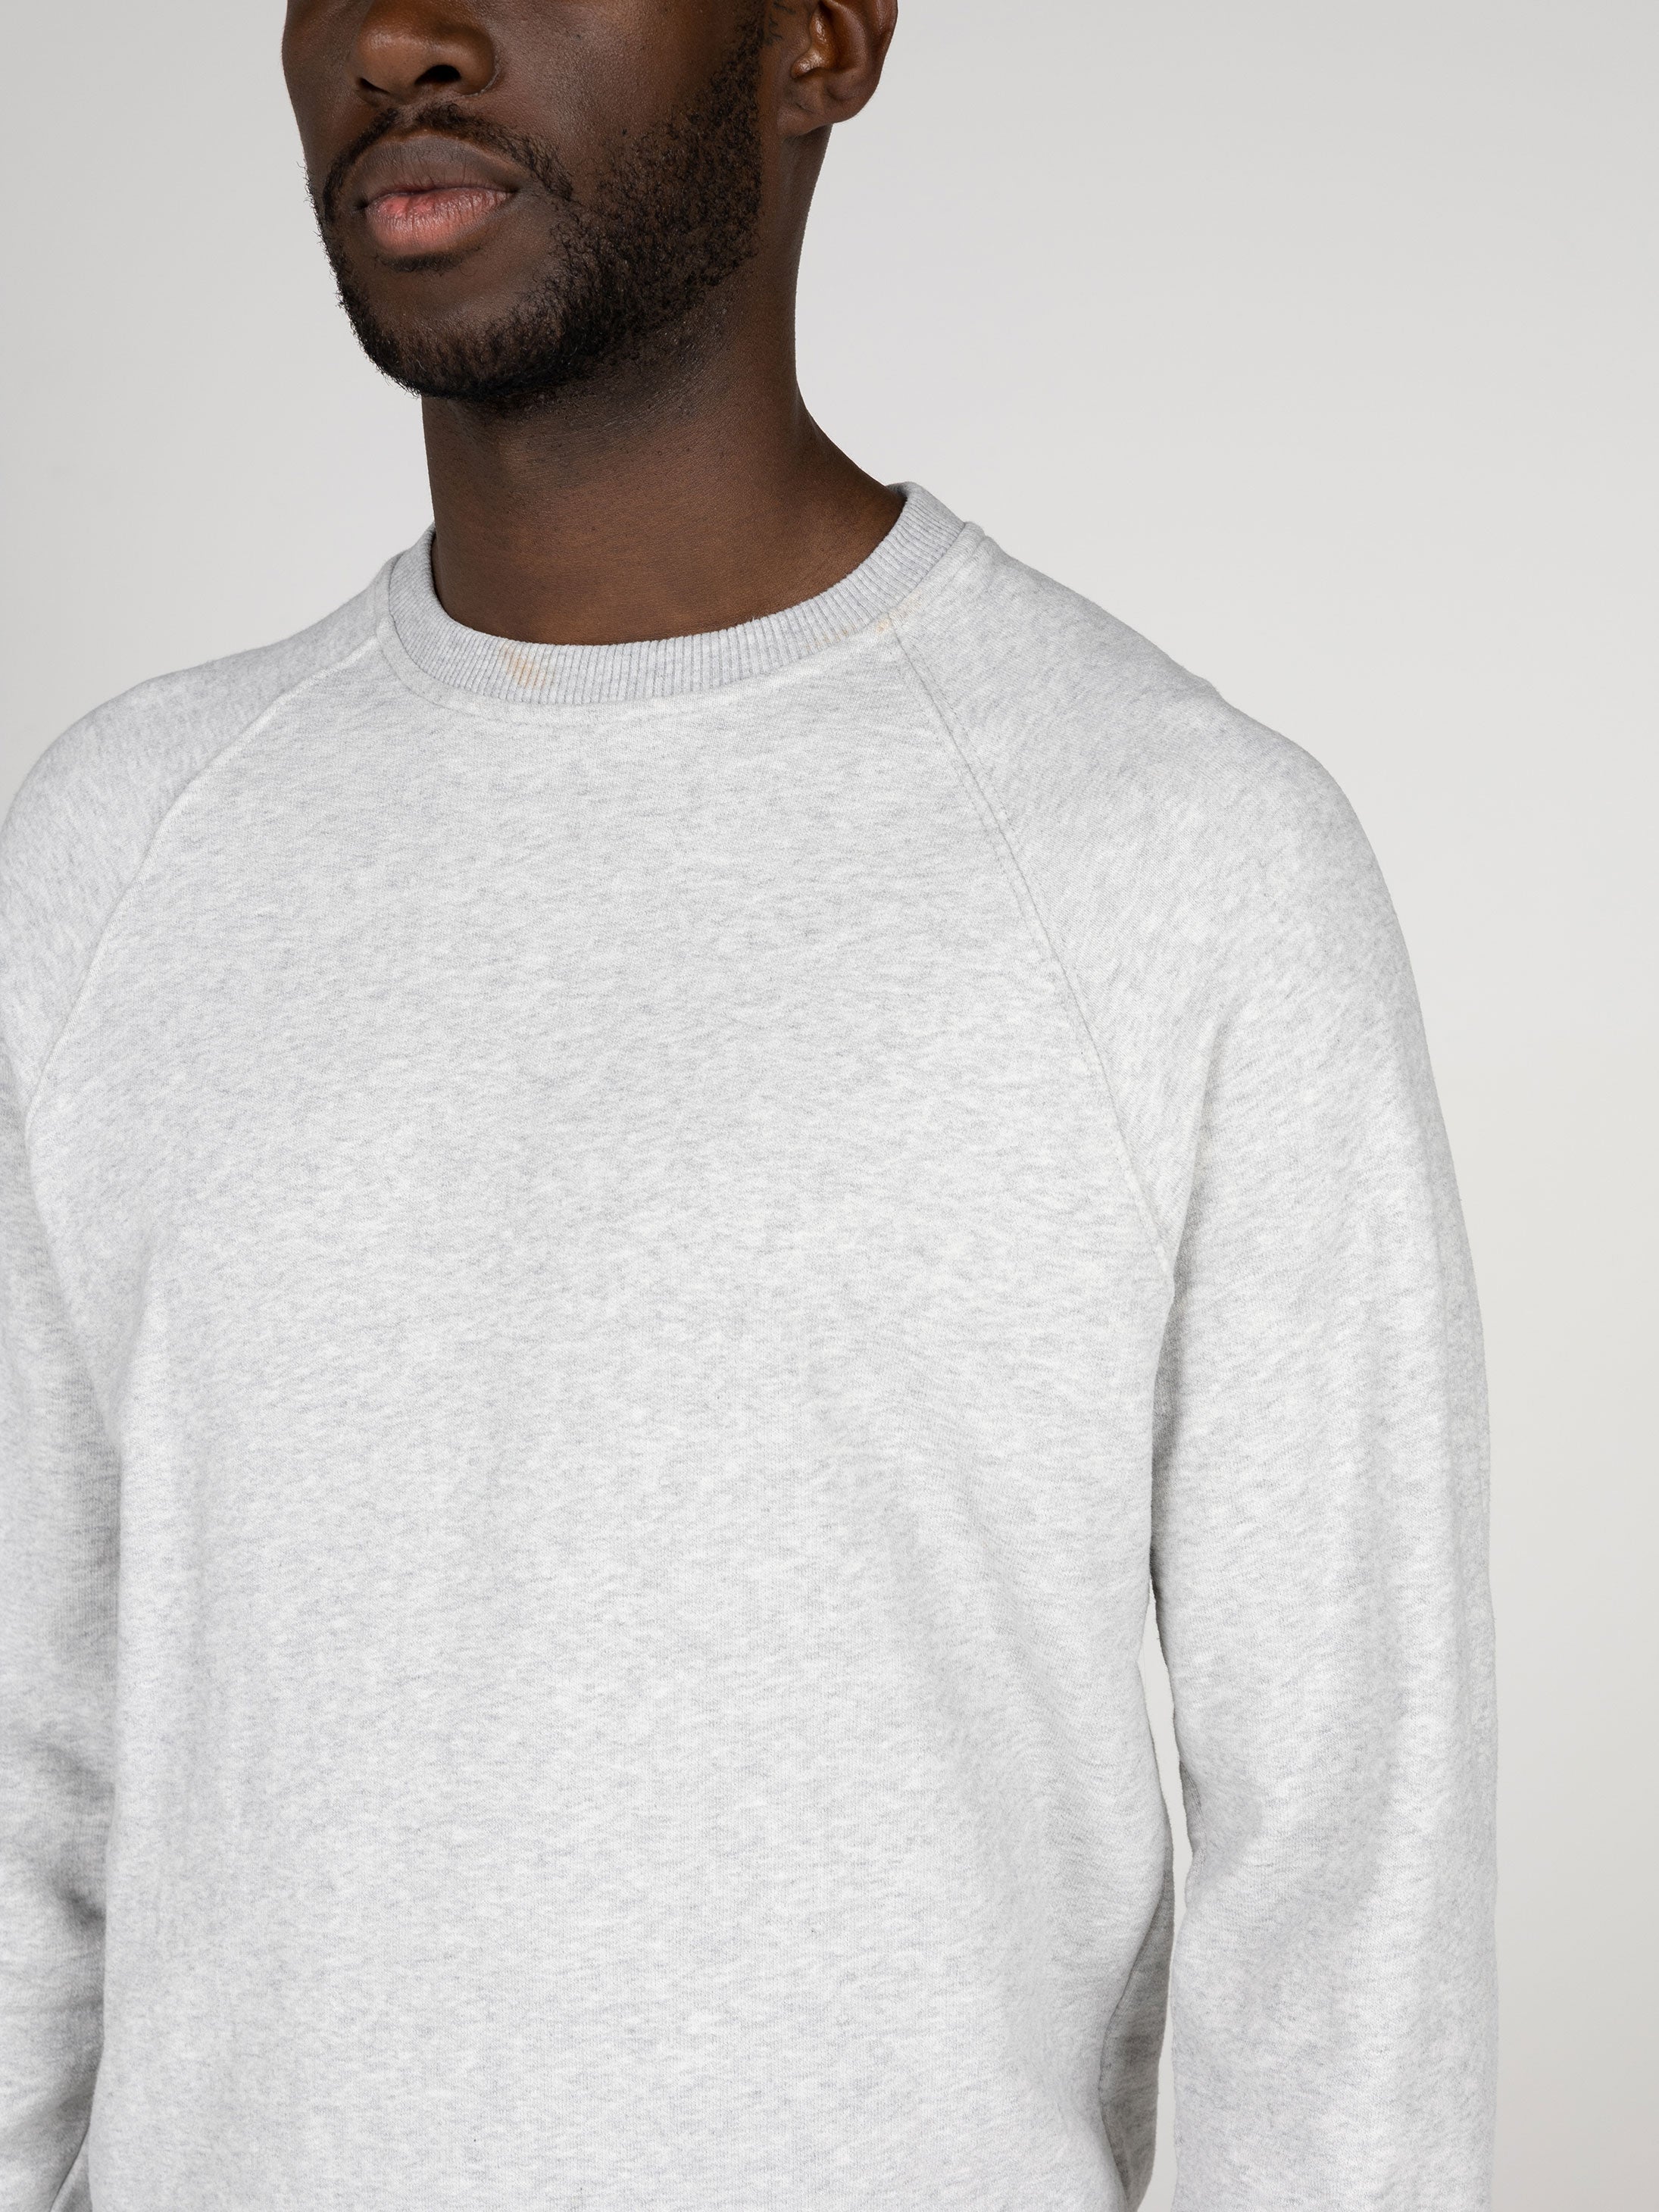 Men's Coho Sweatshirt in Grey Marl | Finisterre